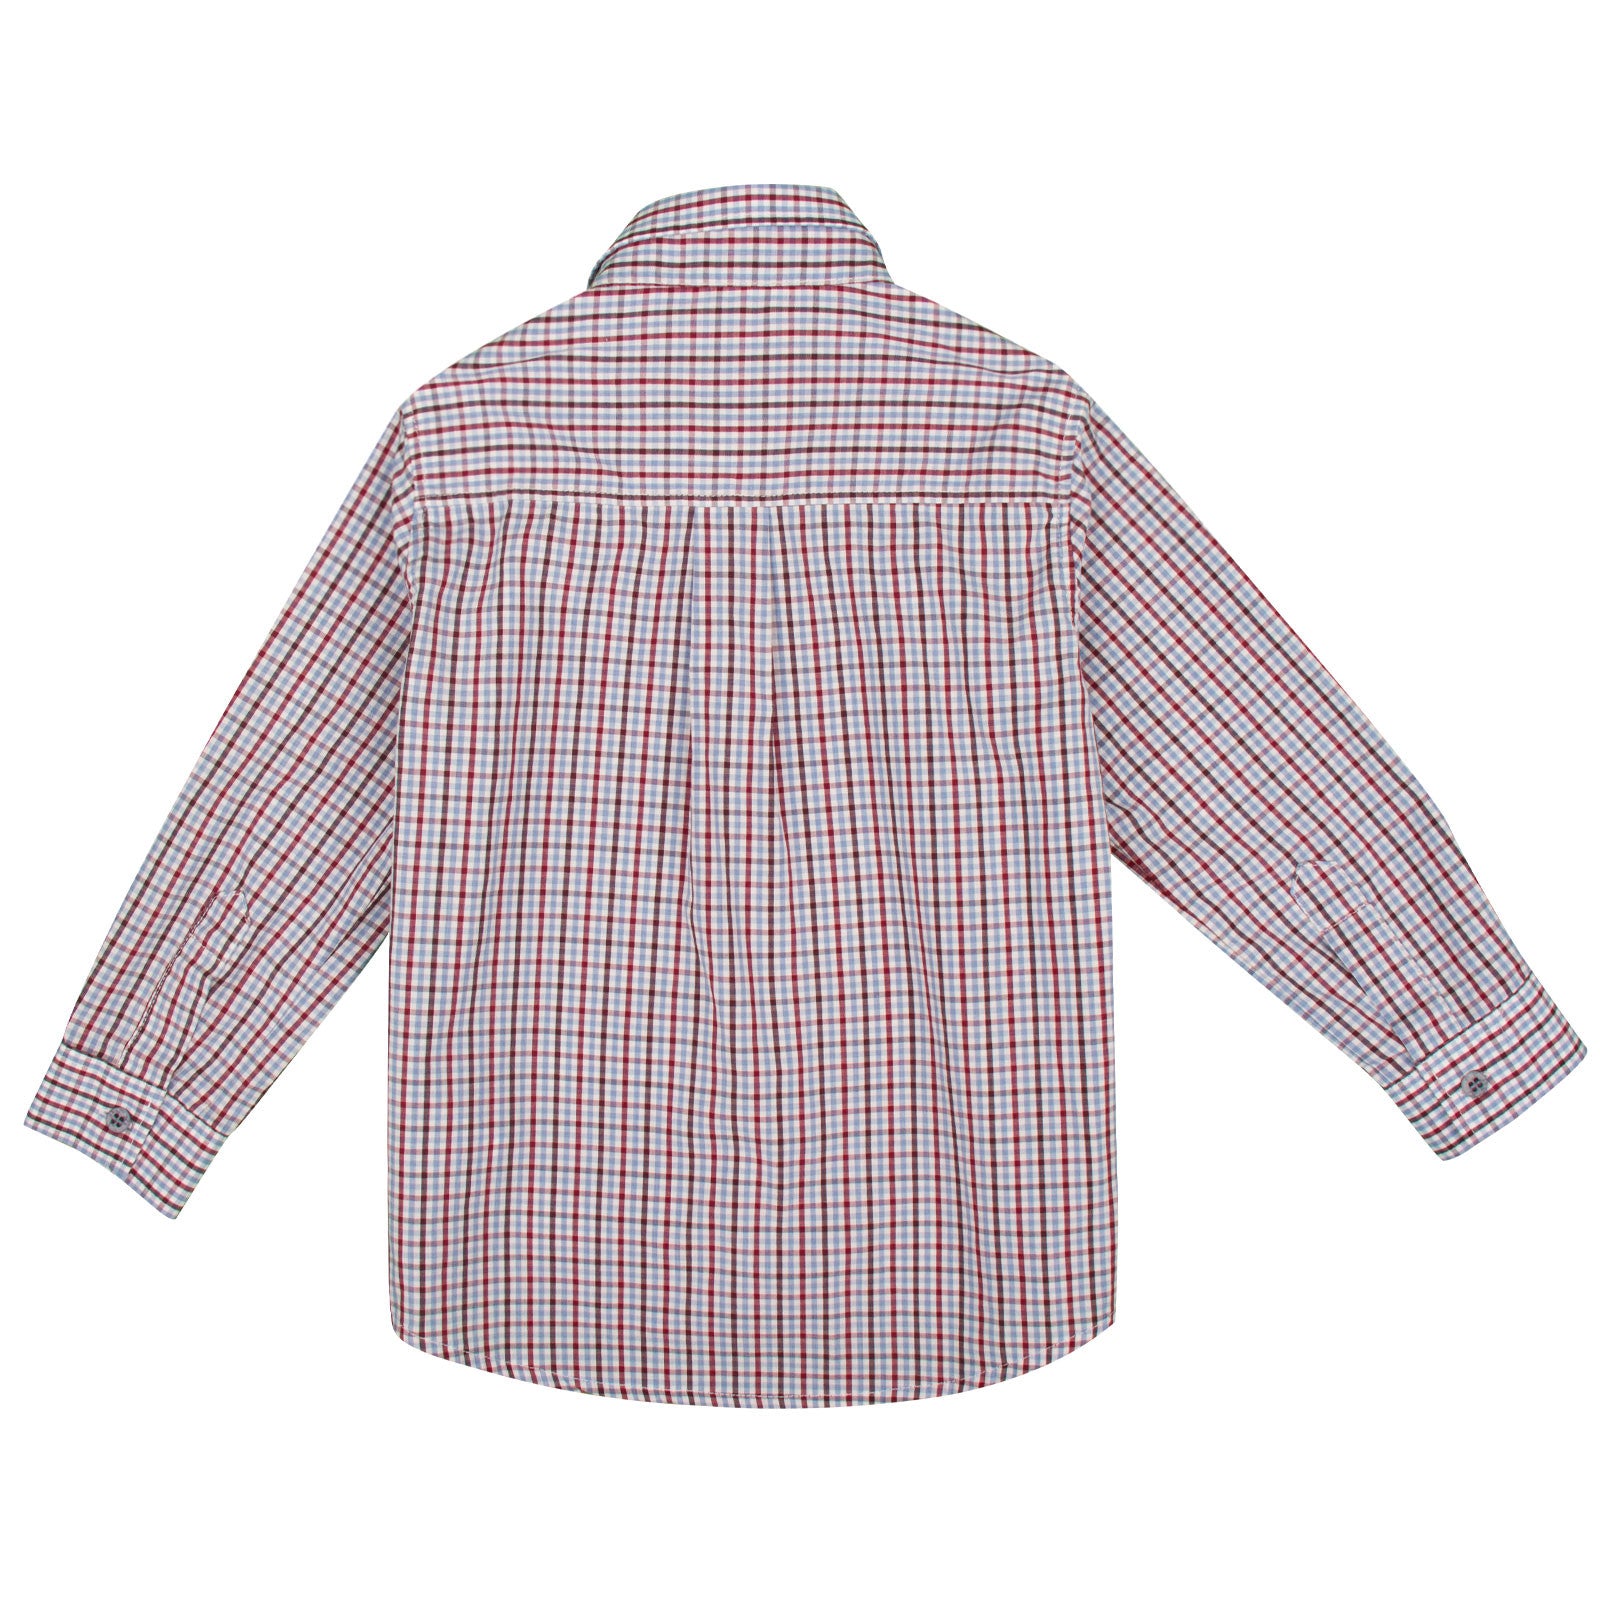 Baby Boys Red Check Cotton Long Sleeve Shirt - CÉMAROSE | Children's Fashion Store - 2